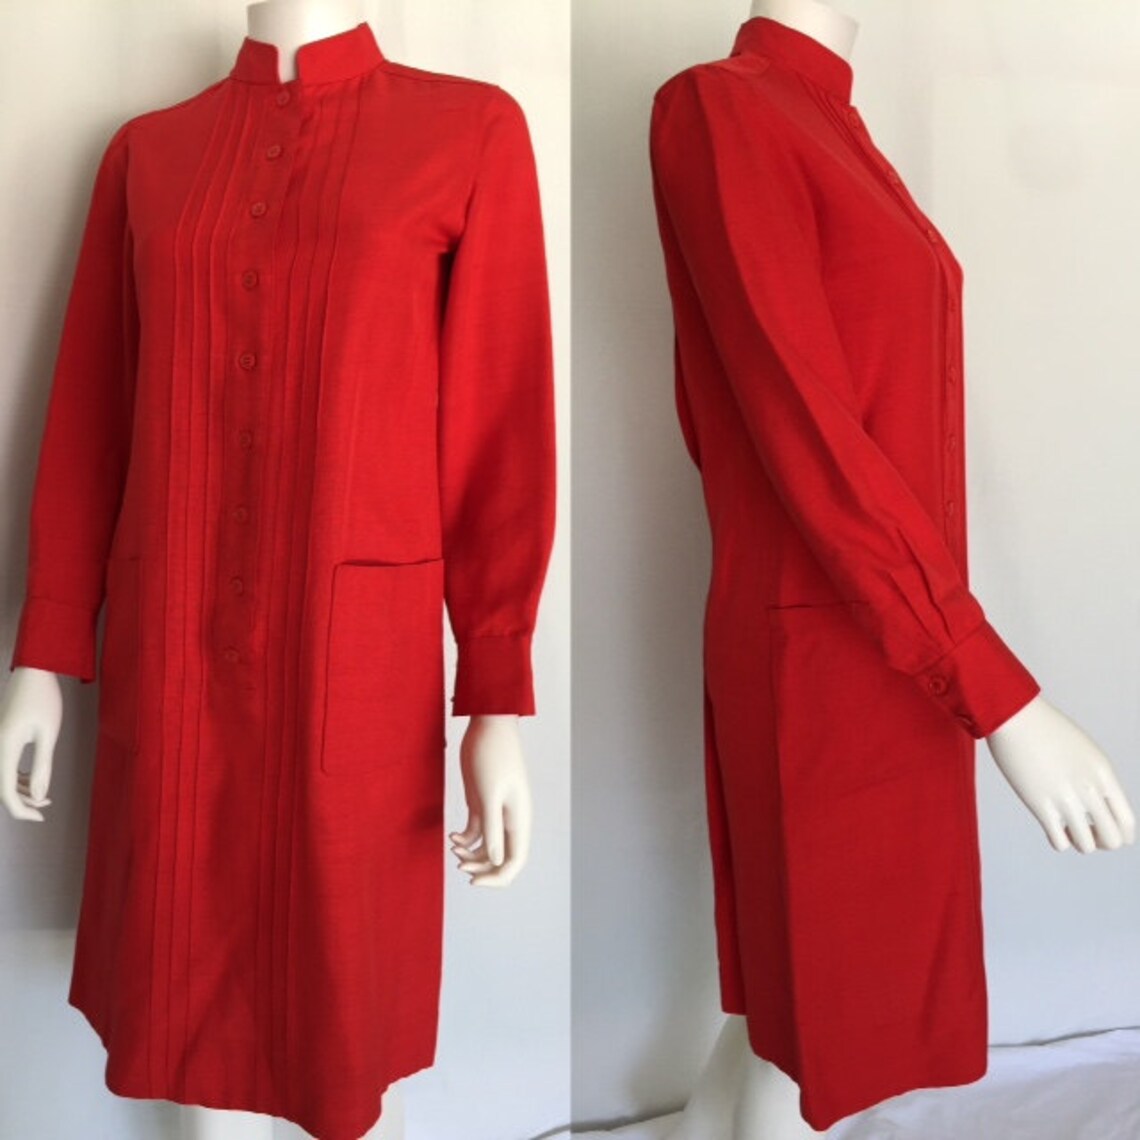 Lipstick Red Silk Linen Givenchy Shift Dress Circa 1960s | Etsy